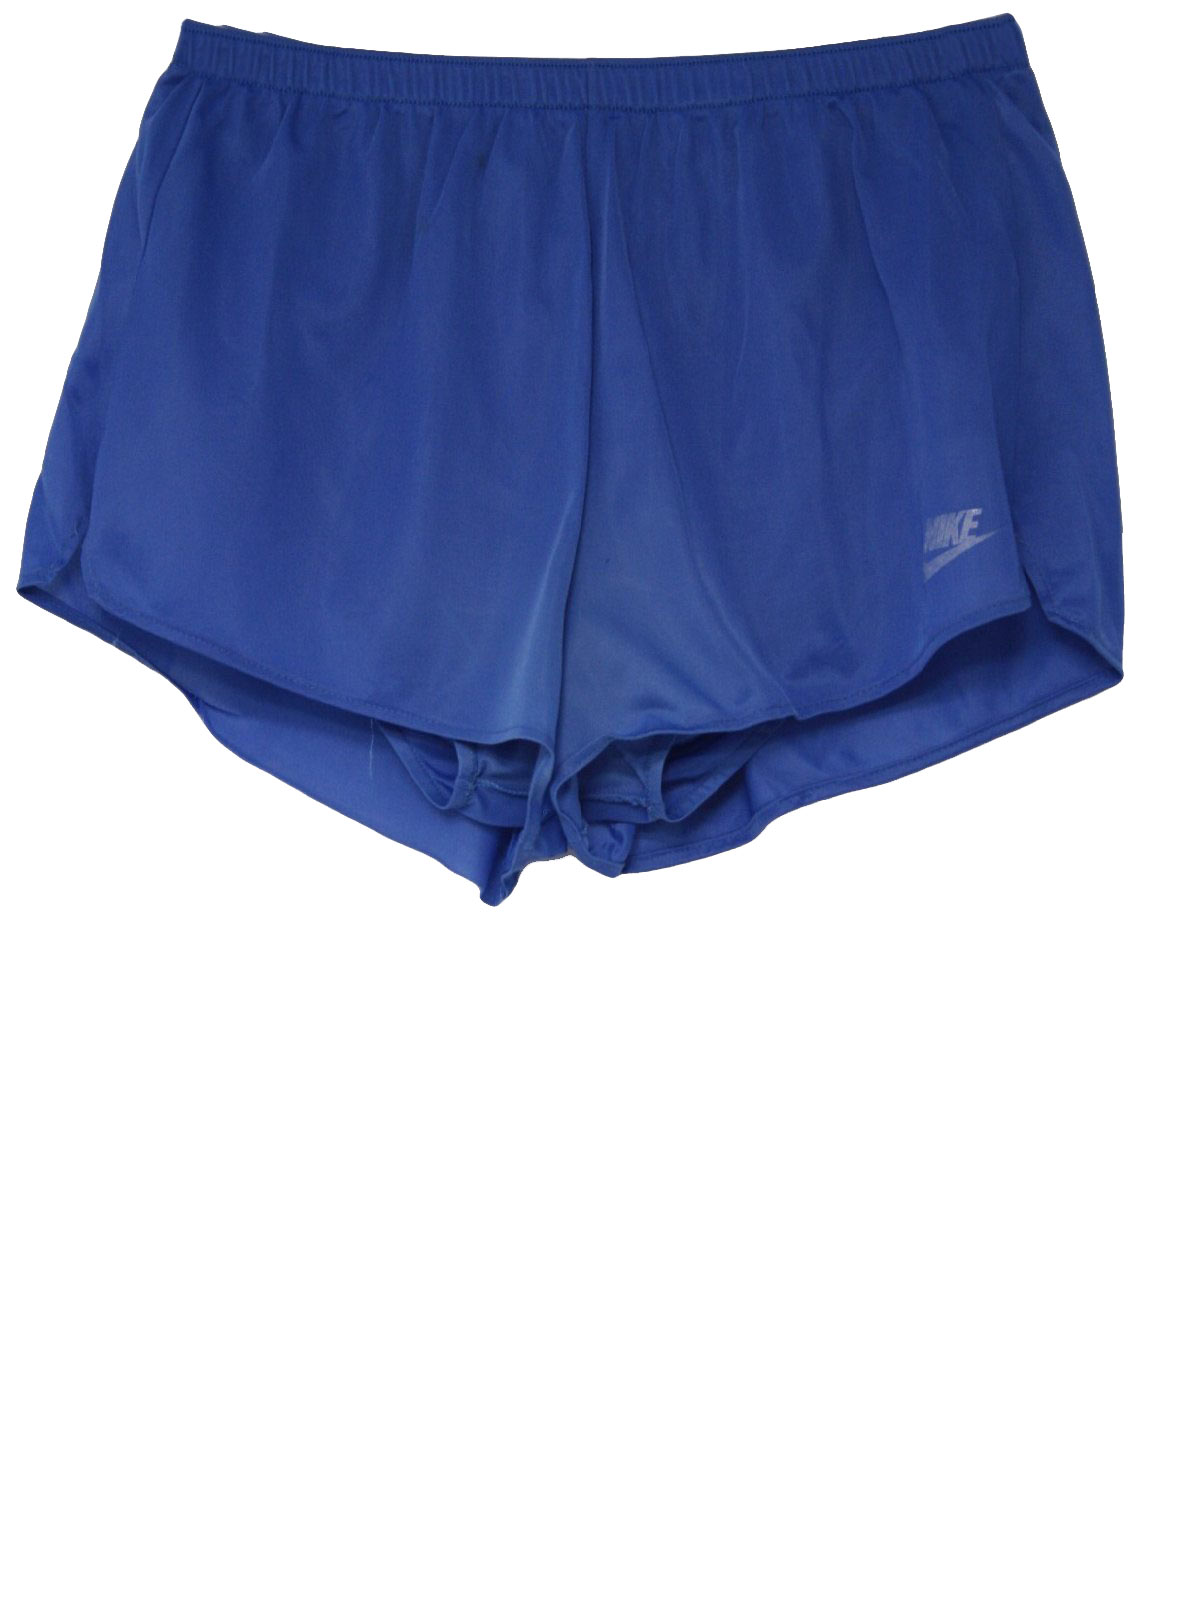 1980's Retro Shorts: 80s -Nike- Mens blue nylon super short sport ...